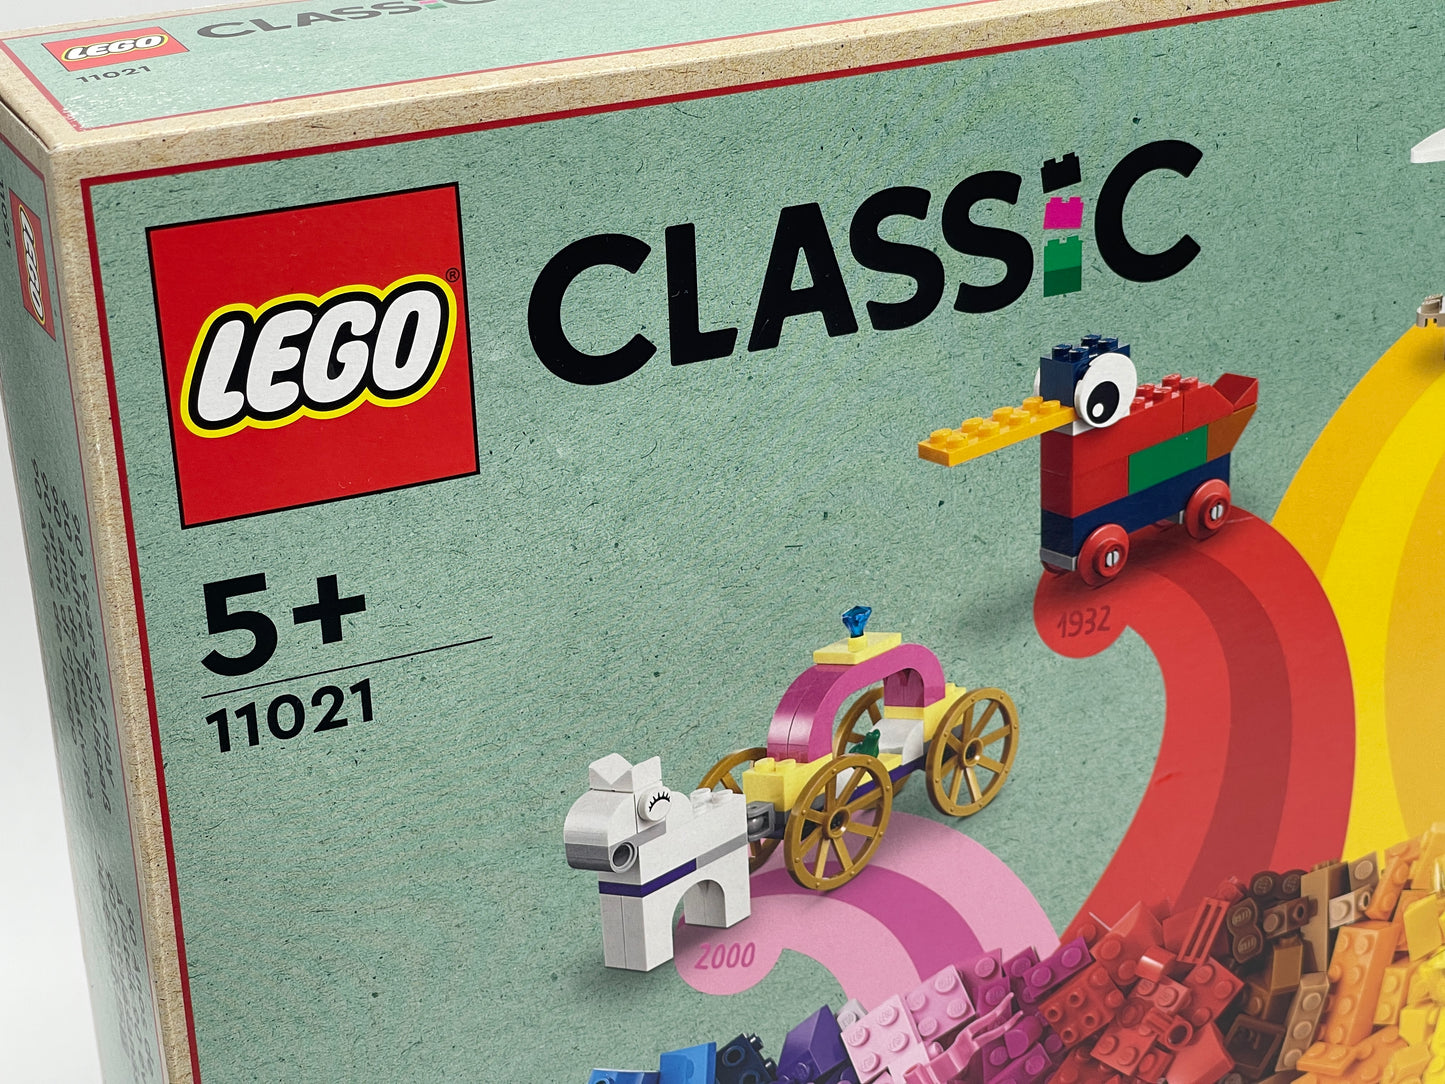 LEGO Classic "90 Jahre Spielspaß" 15 Modelle legendärer Spielzeuge (11021)